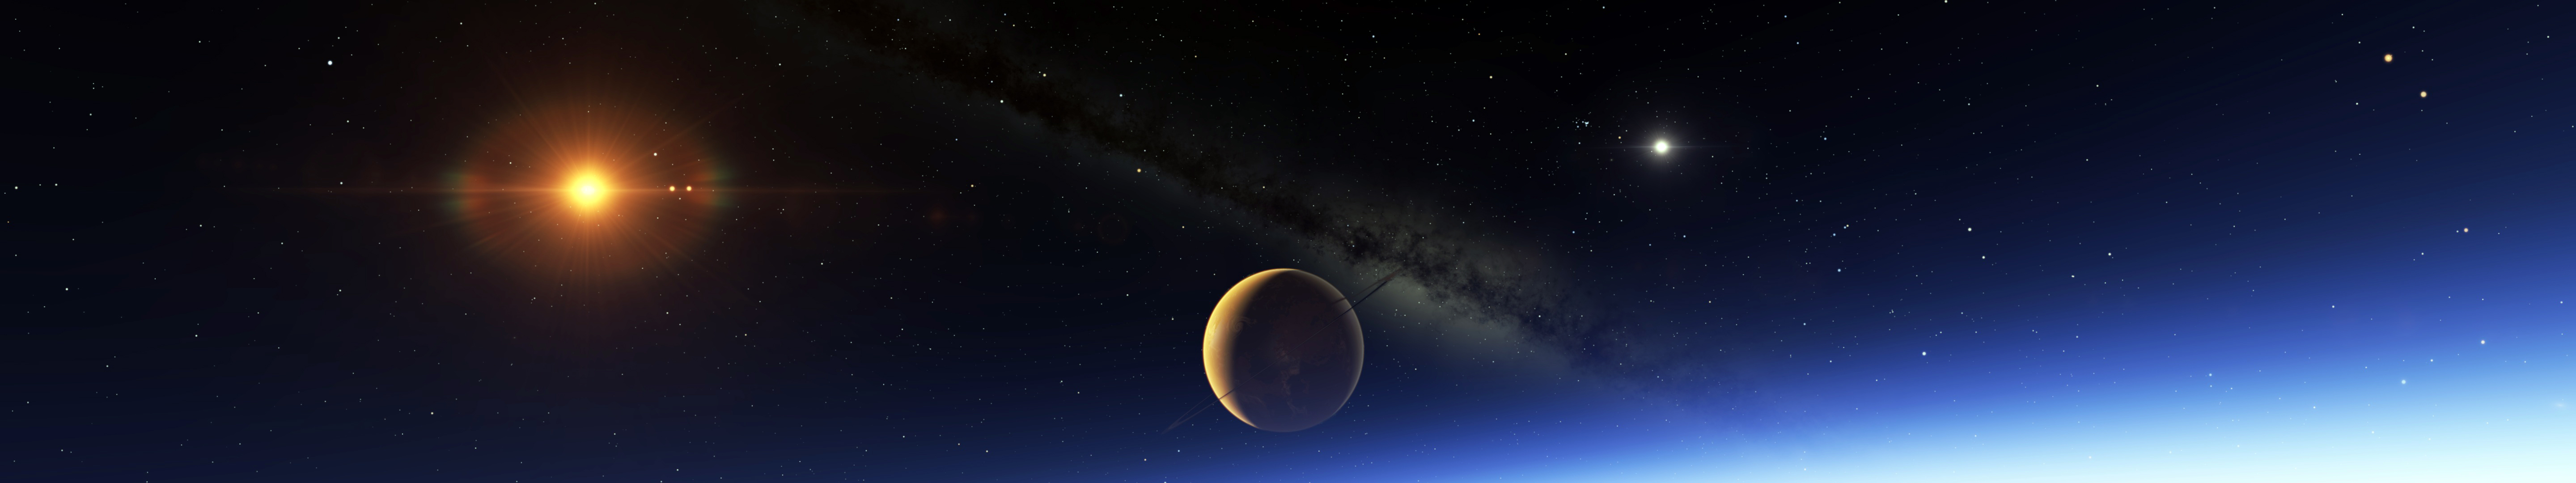 Space Engine Stars Planet Galaxy 3D Render CGi Digital Art Space Art 5760x1080